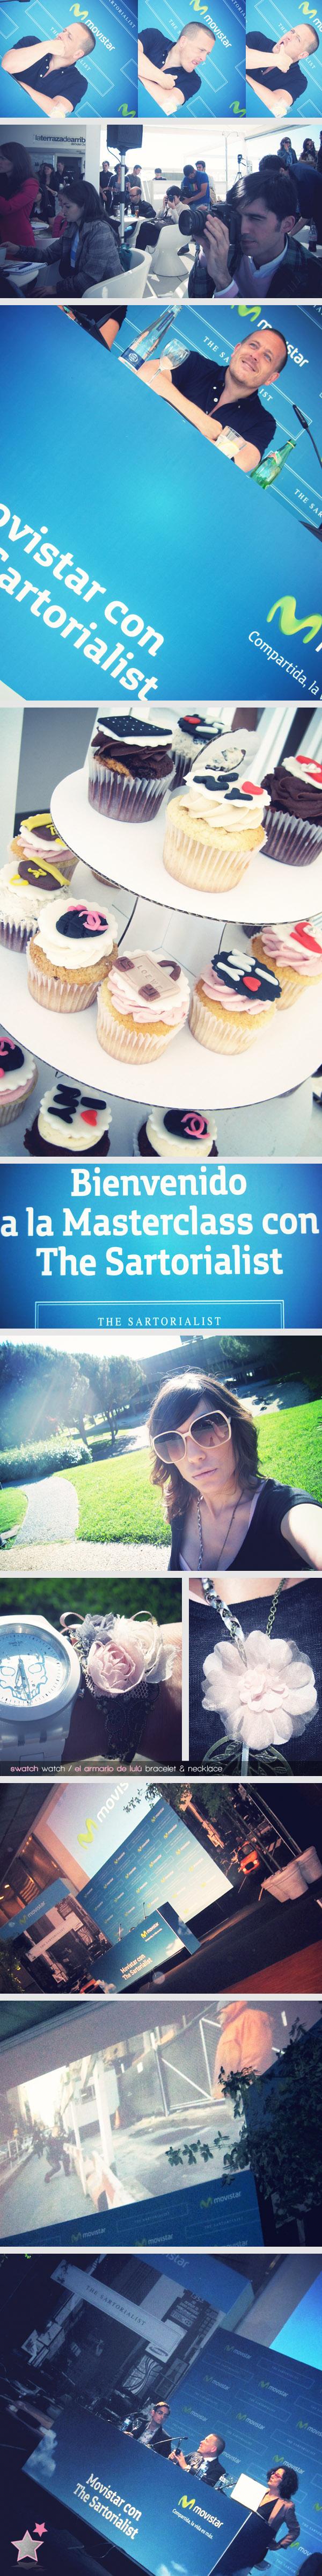 the sartorialist // III encuentro 